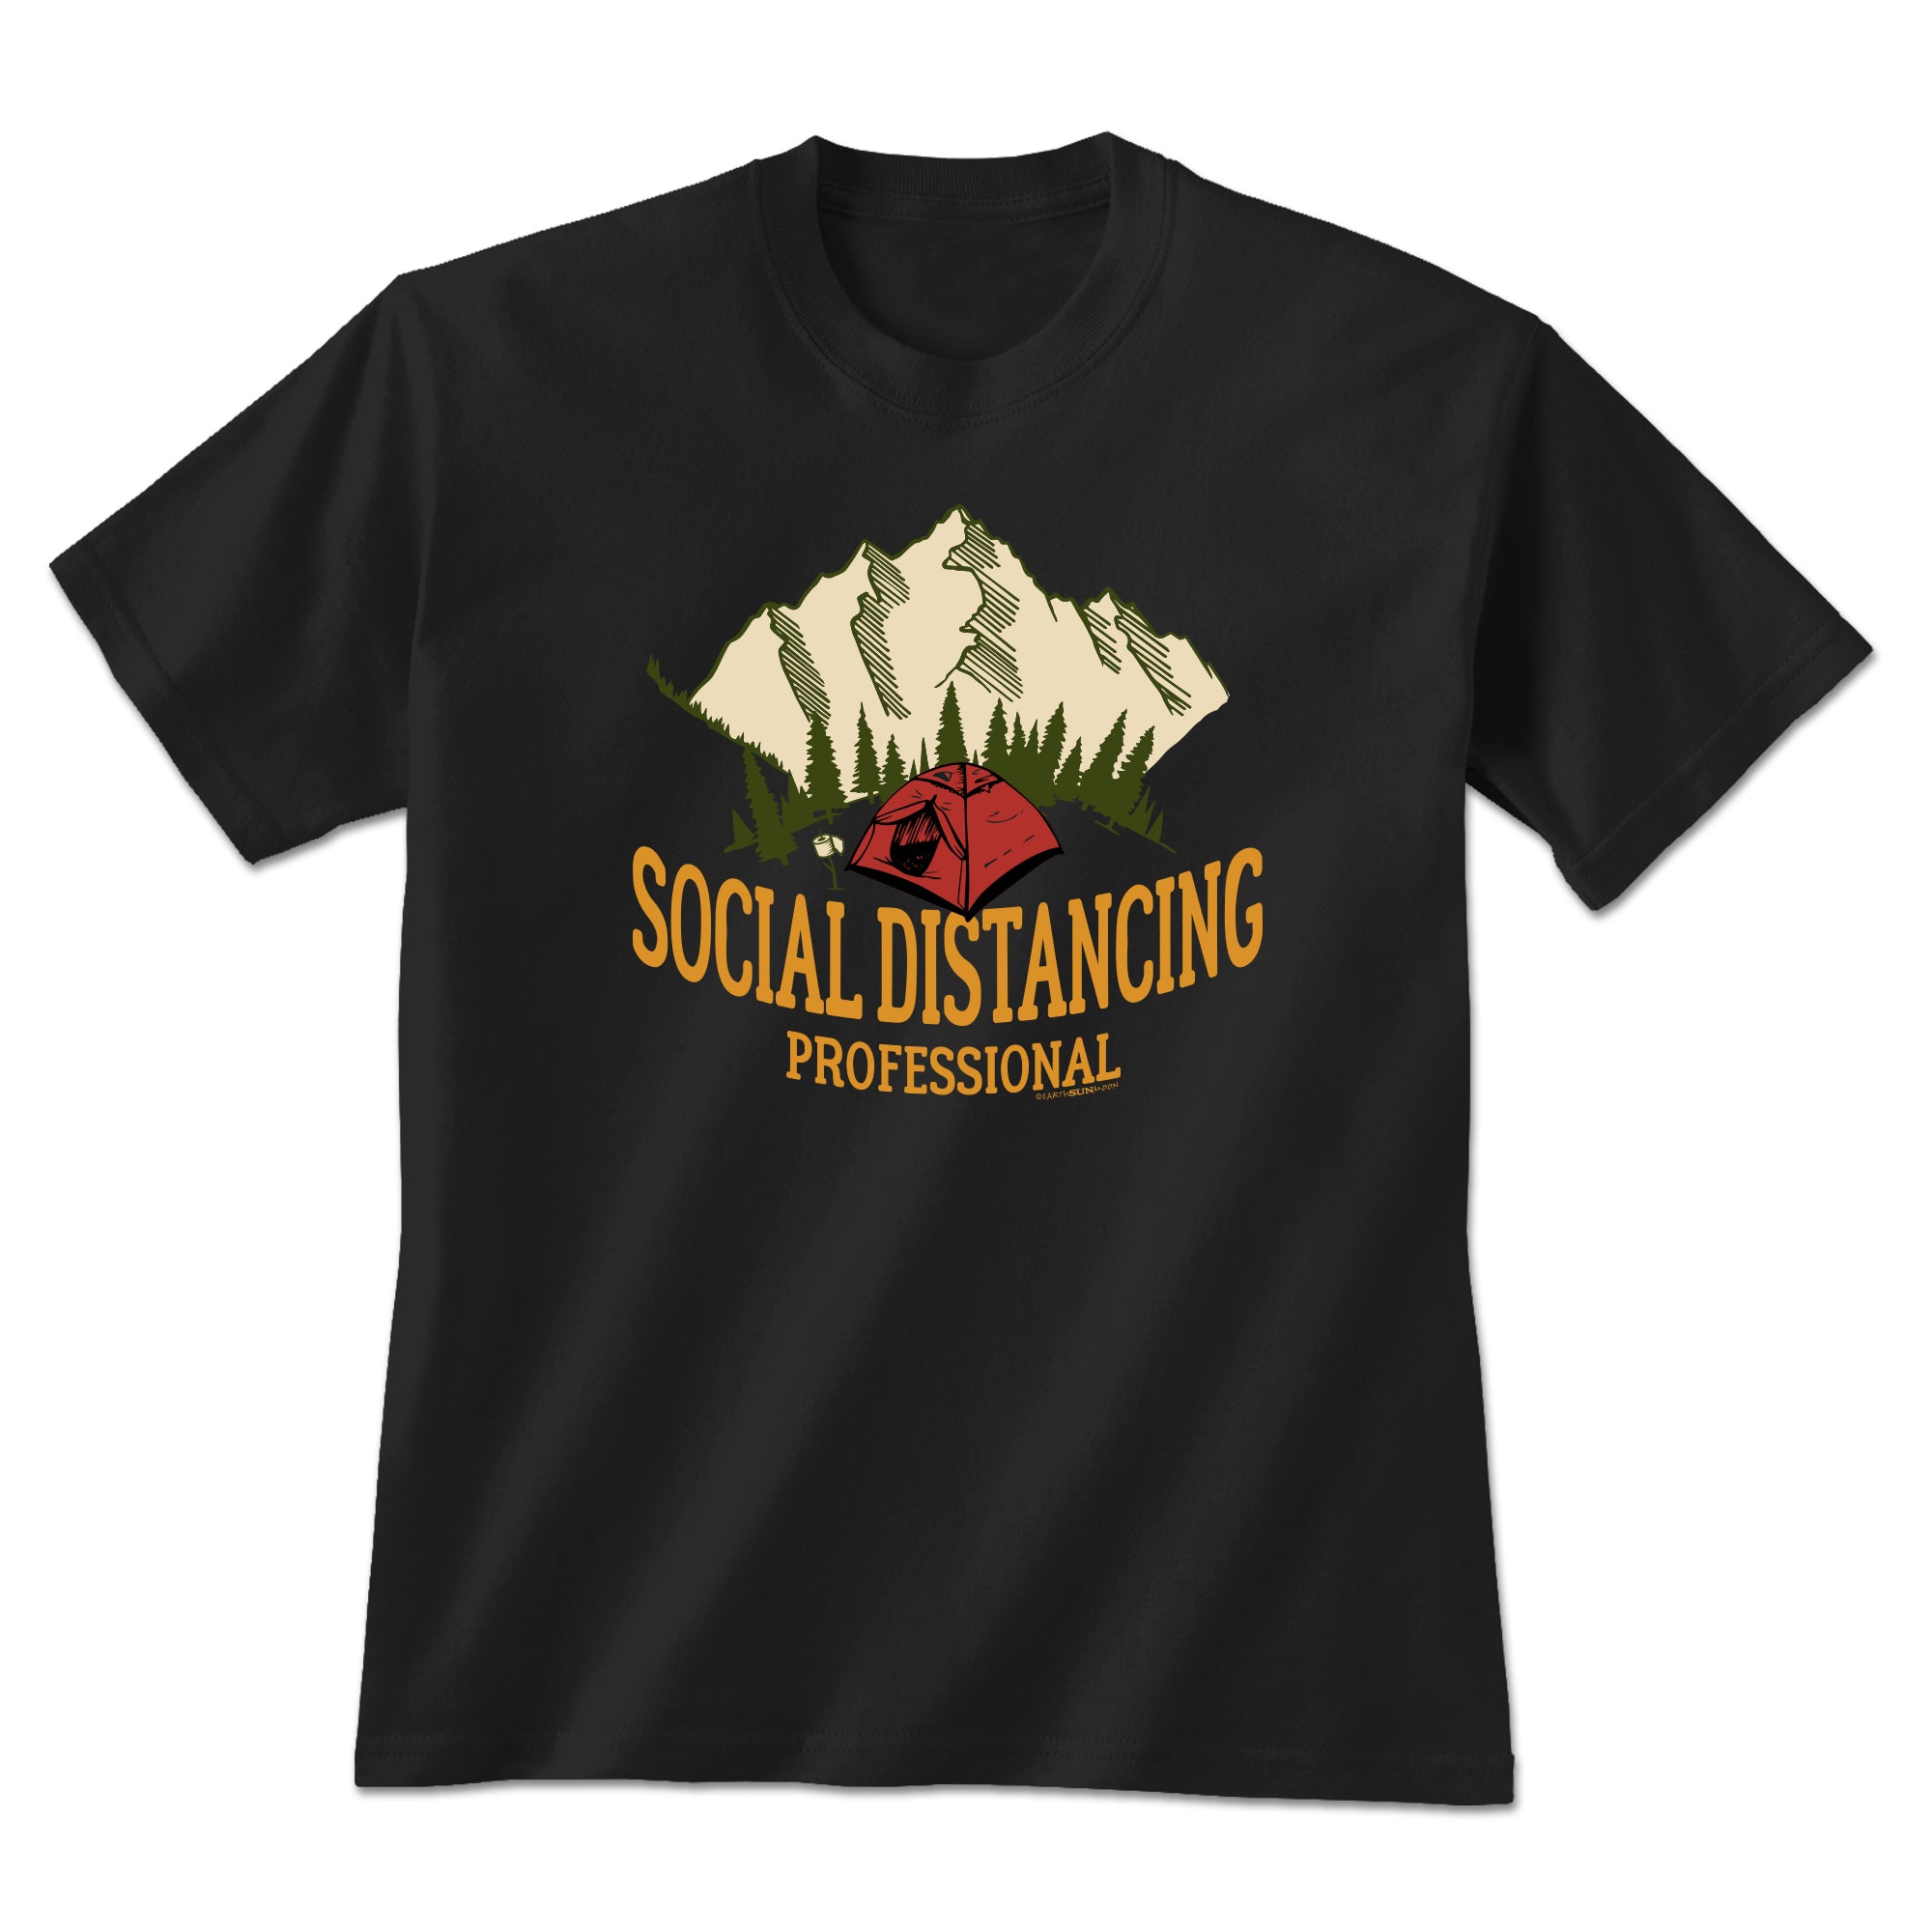 Social Distancing Professional T-Shirt - Black - XL